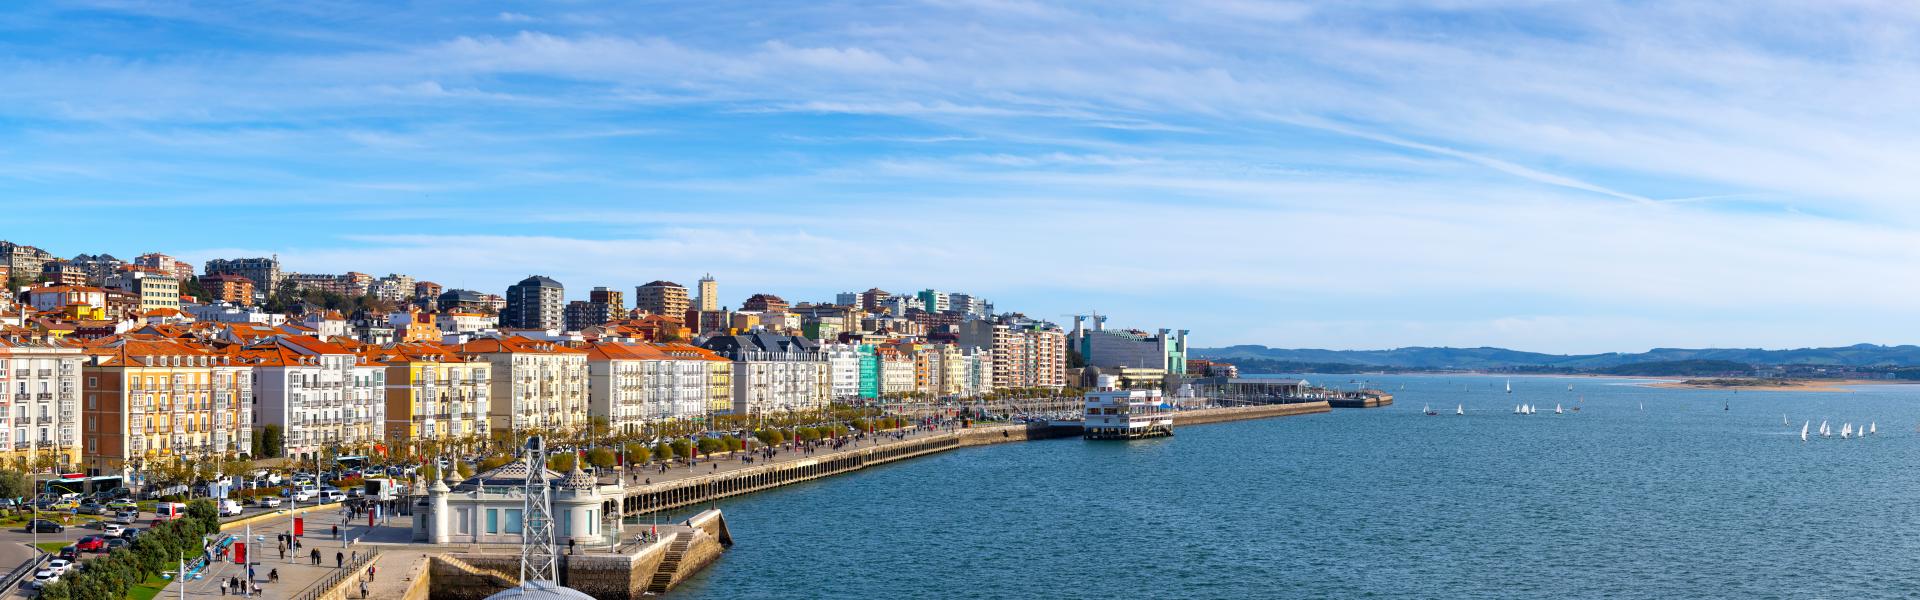 Santander Scenic View